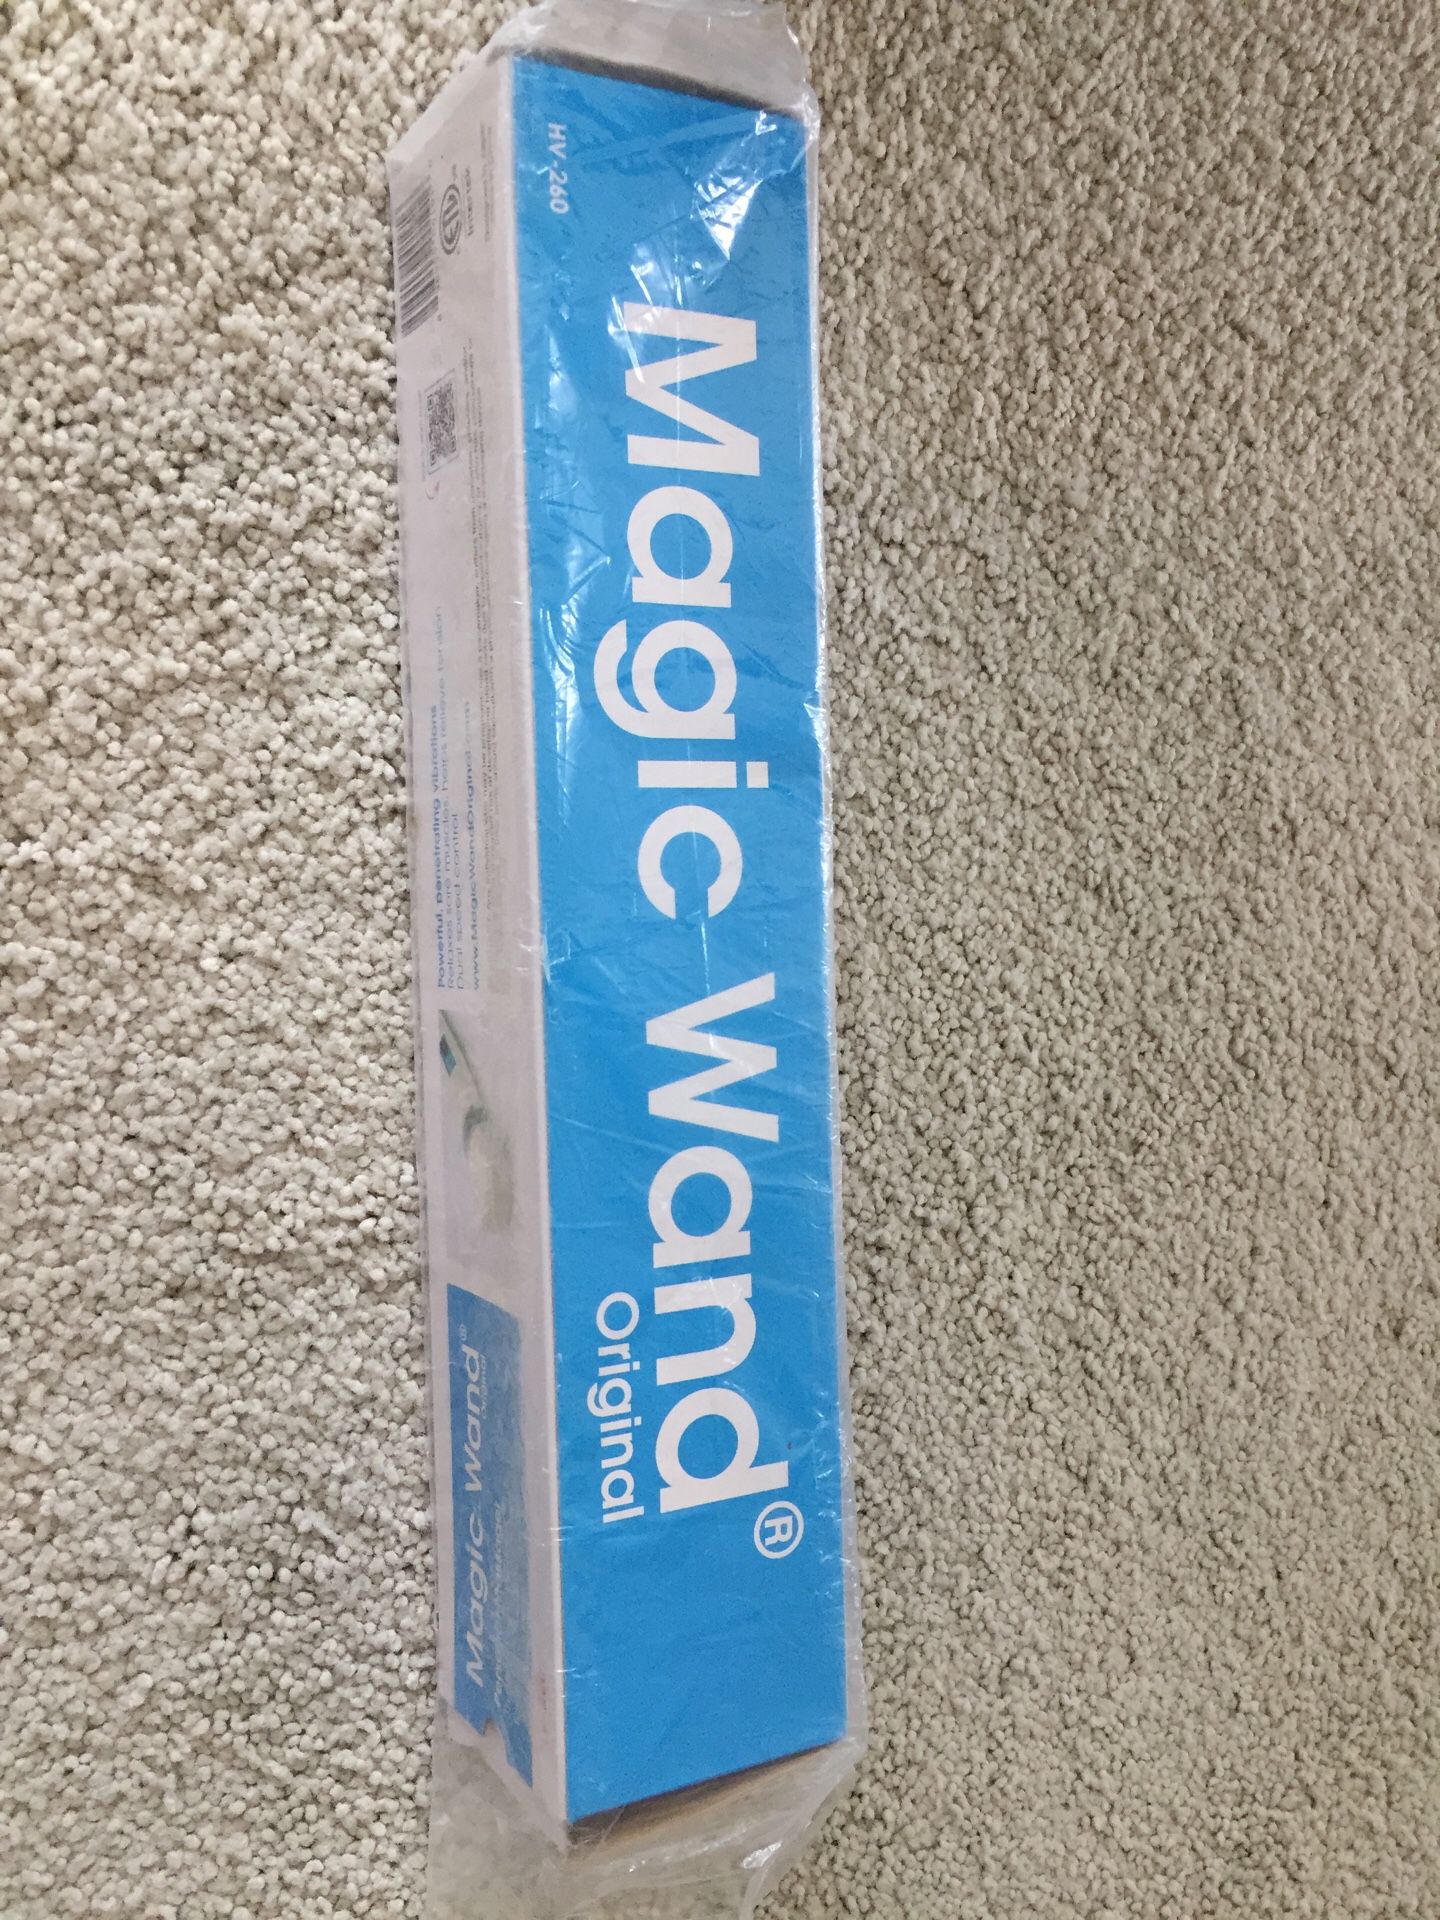 Original Magic Wand vibrator, muscle relaxer